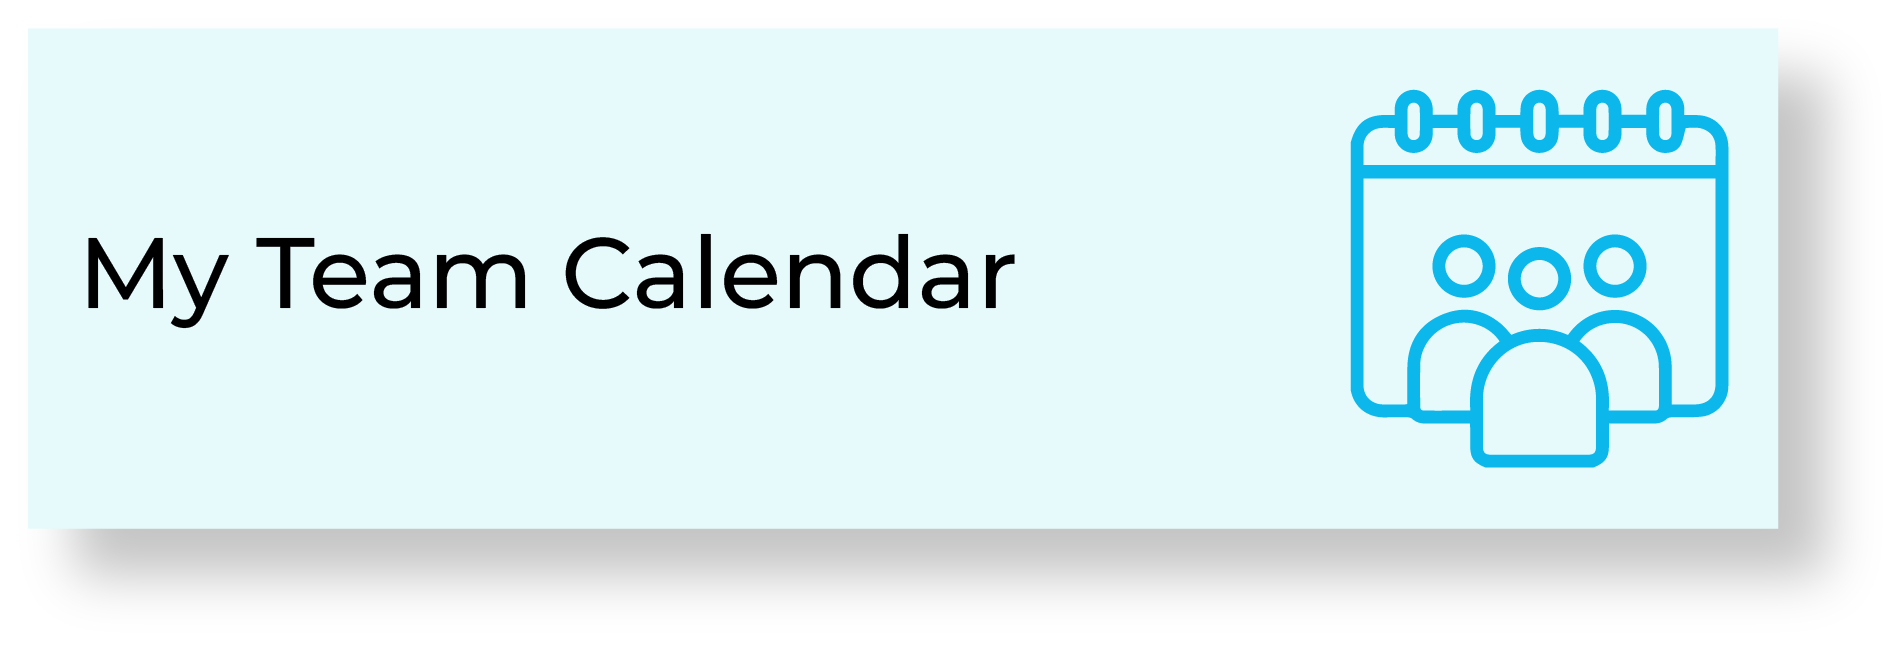 My Team Calendar